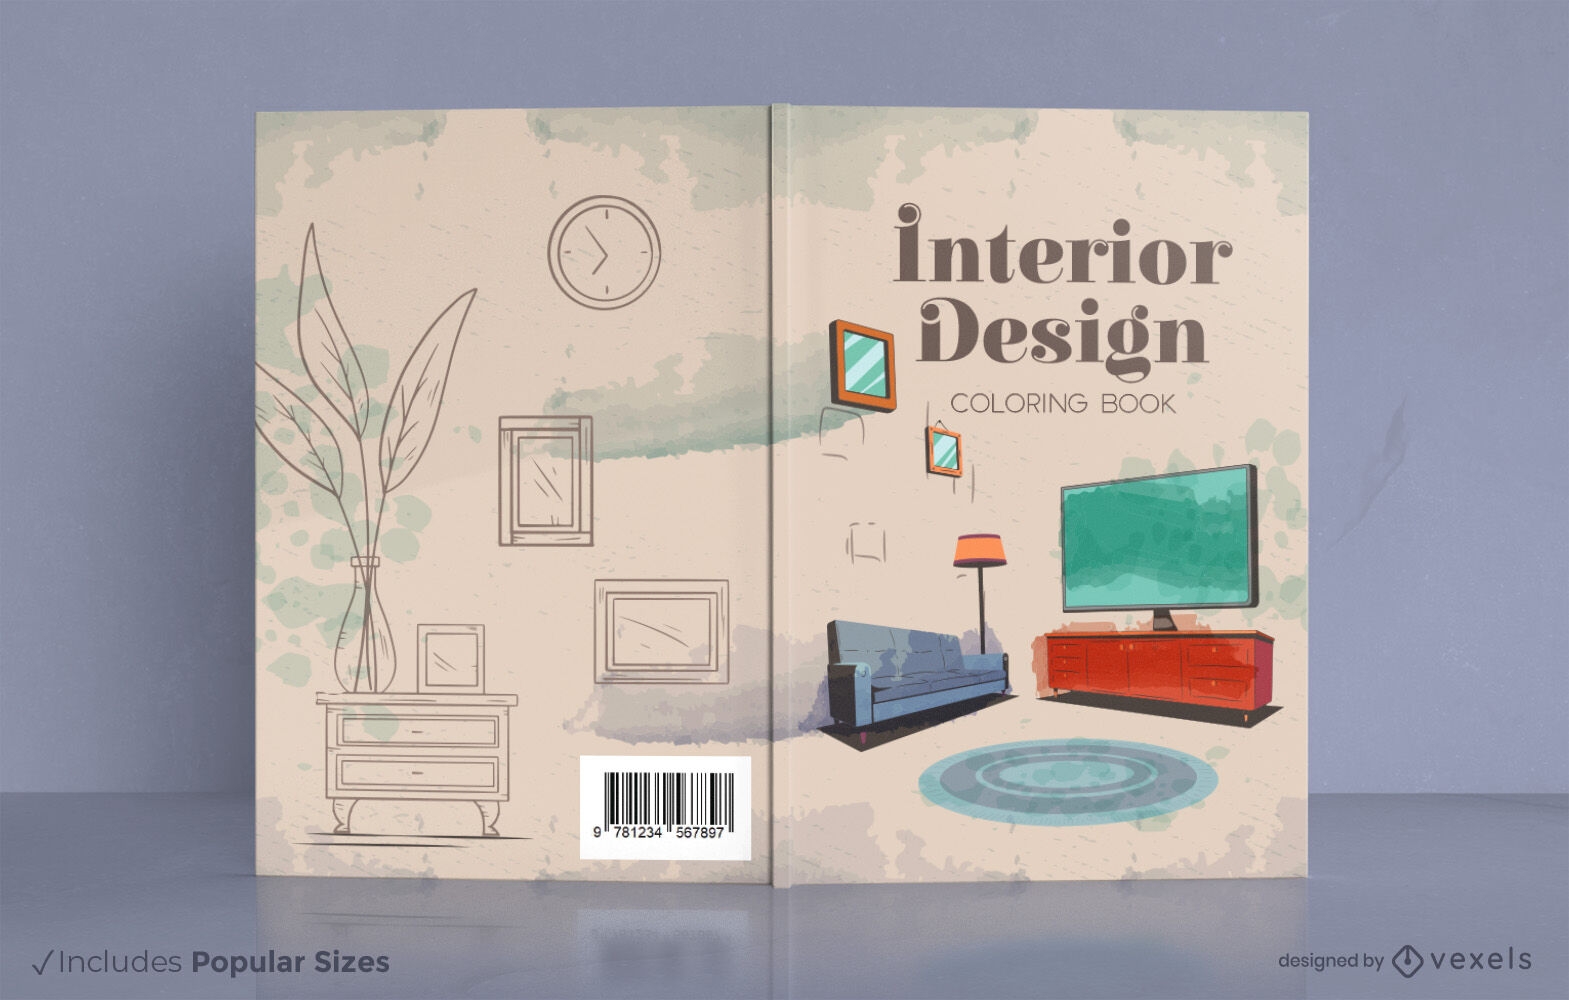 Interior design living room book cover design